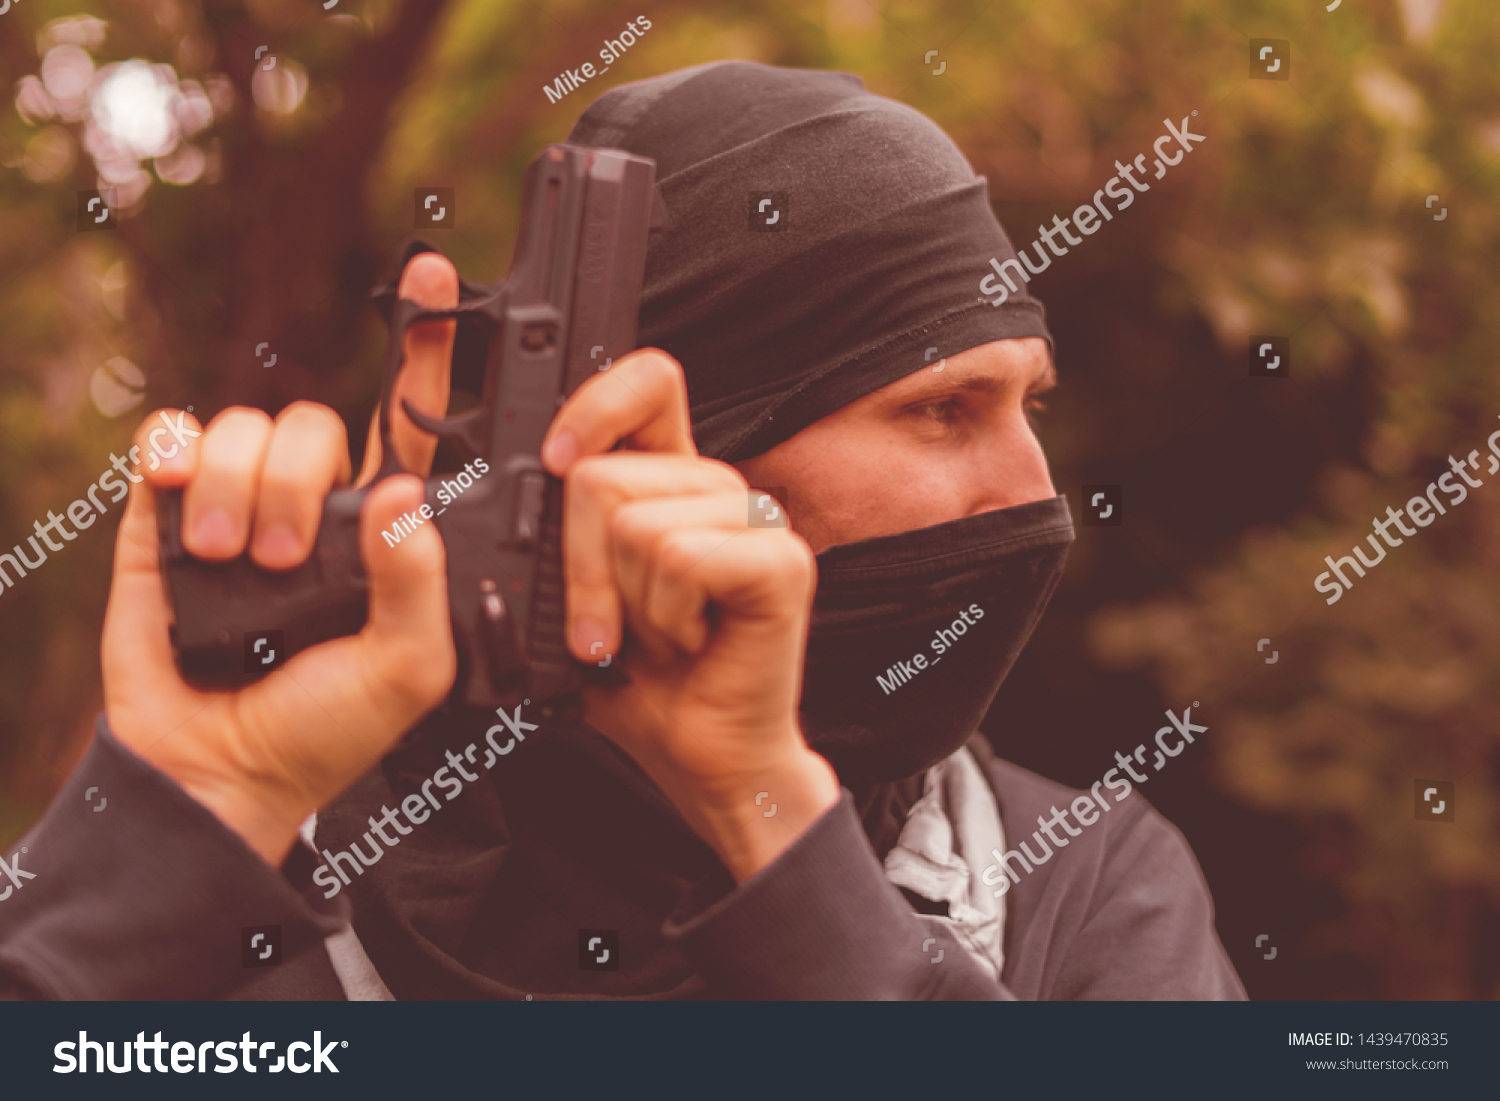 burglar in mask holding and reloading the pistol outdoor #1439470835